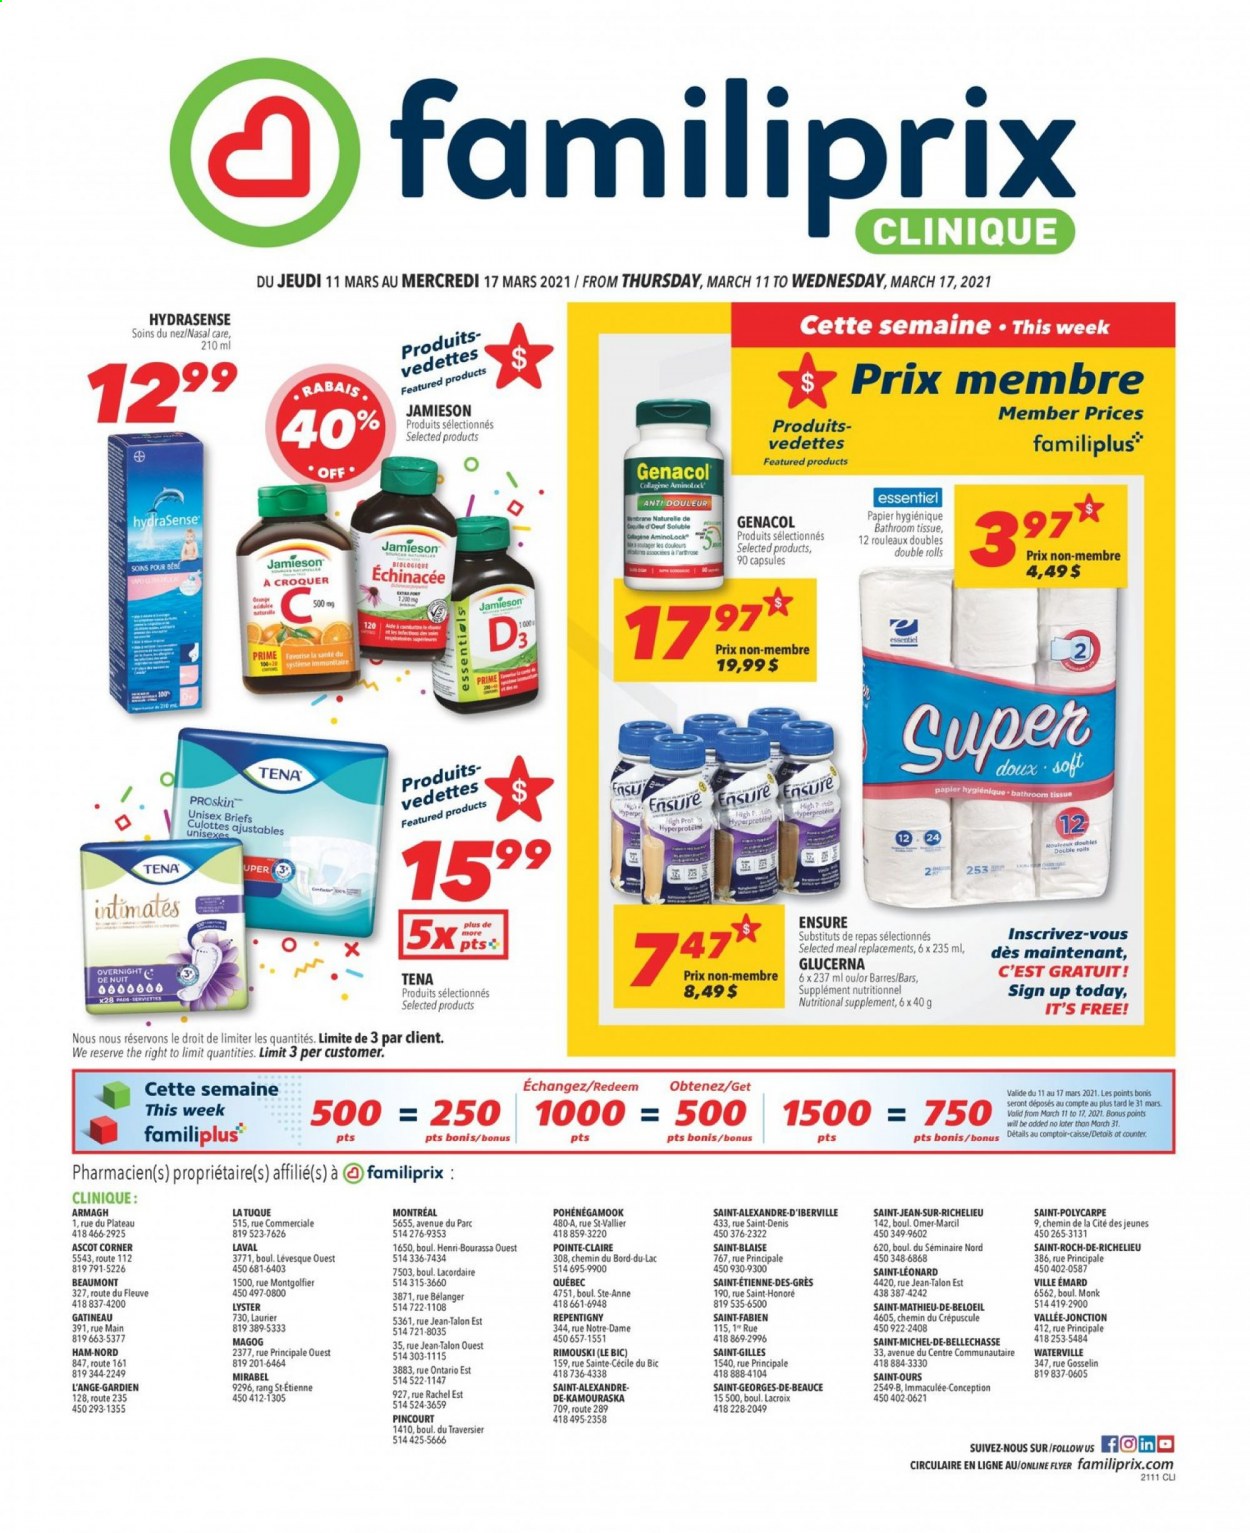 thumbnail - Familiprix Clinique Flyer - March 11, 2021 - March 17, 2021 - Sales products - Mars, bath tissue, Clinique, BIC, Glucerna, nutritional supplement. Page 1.